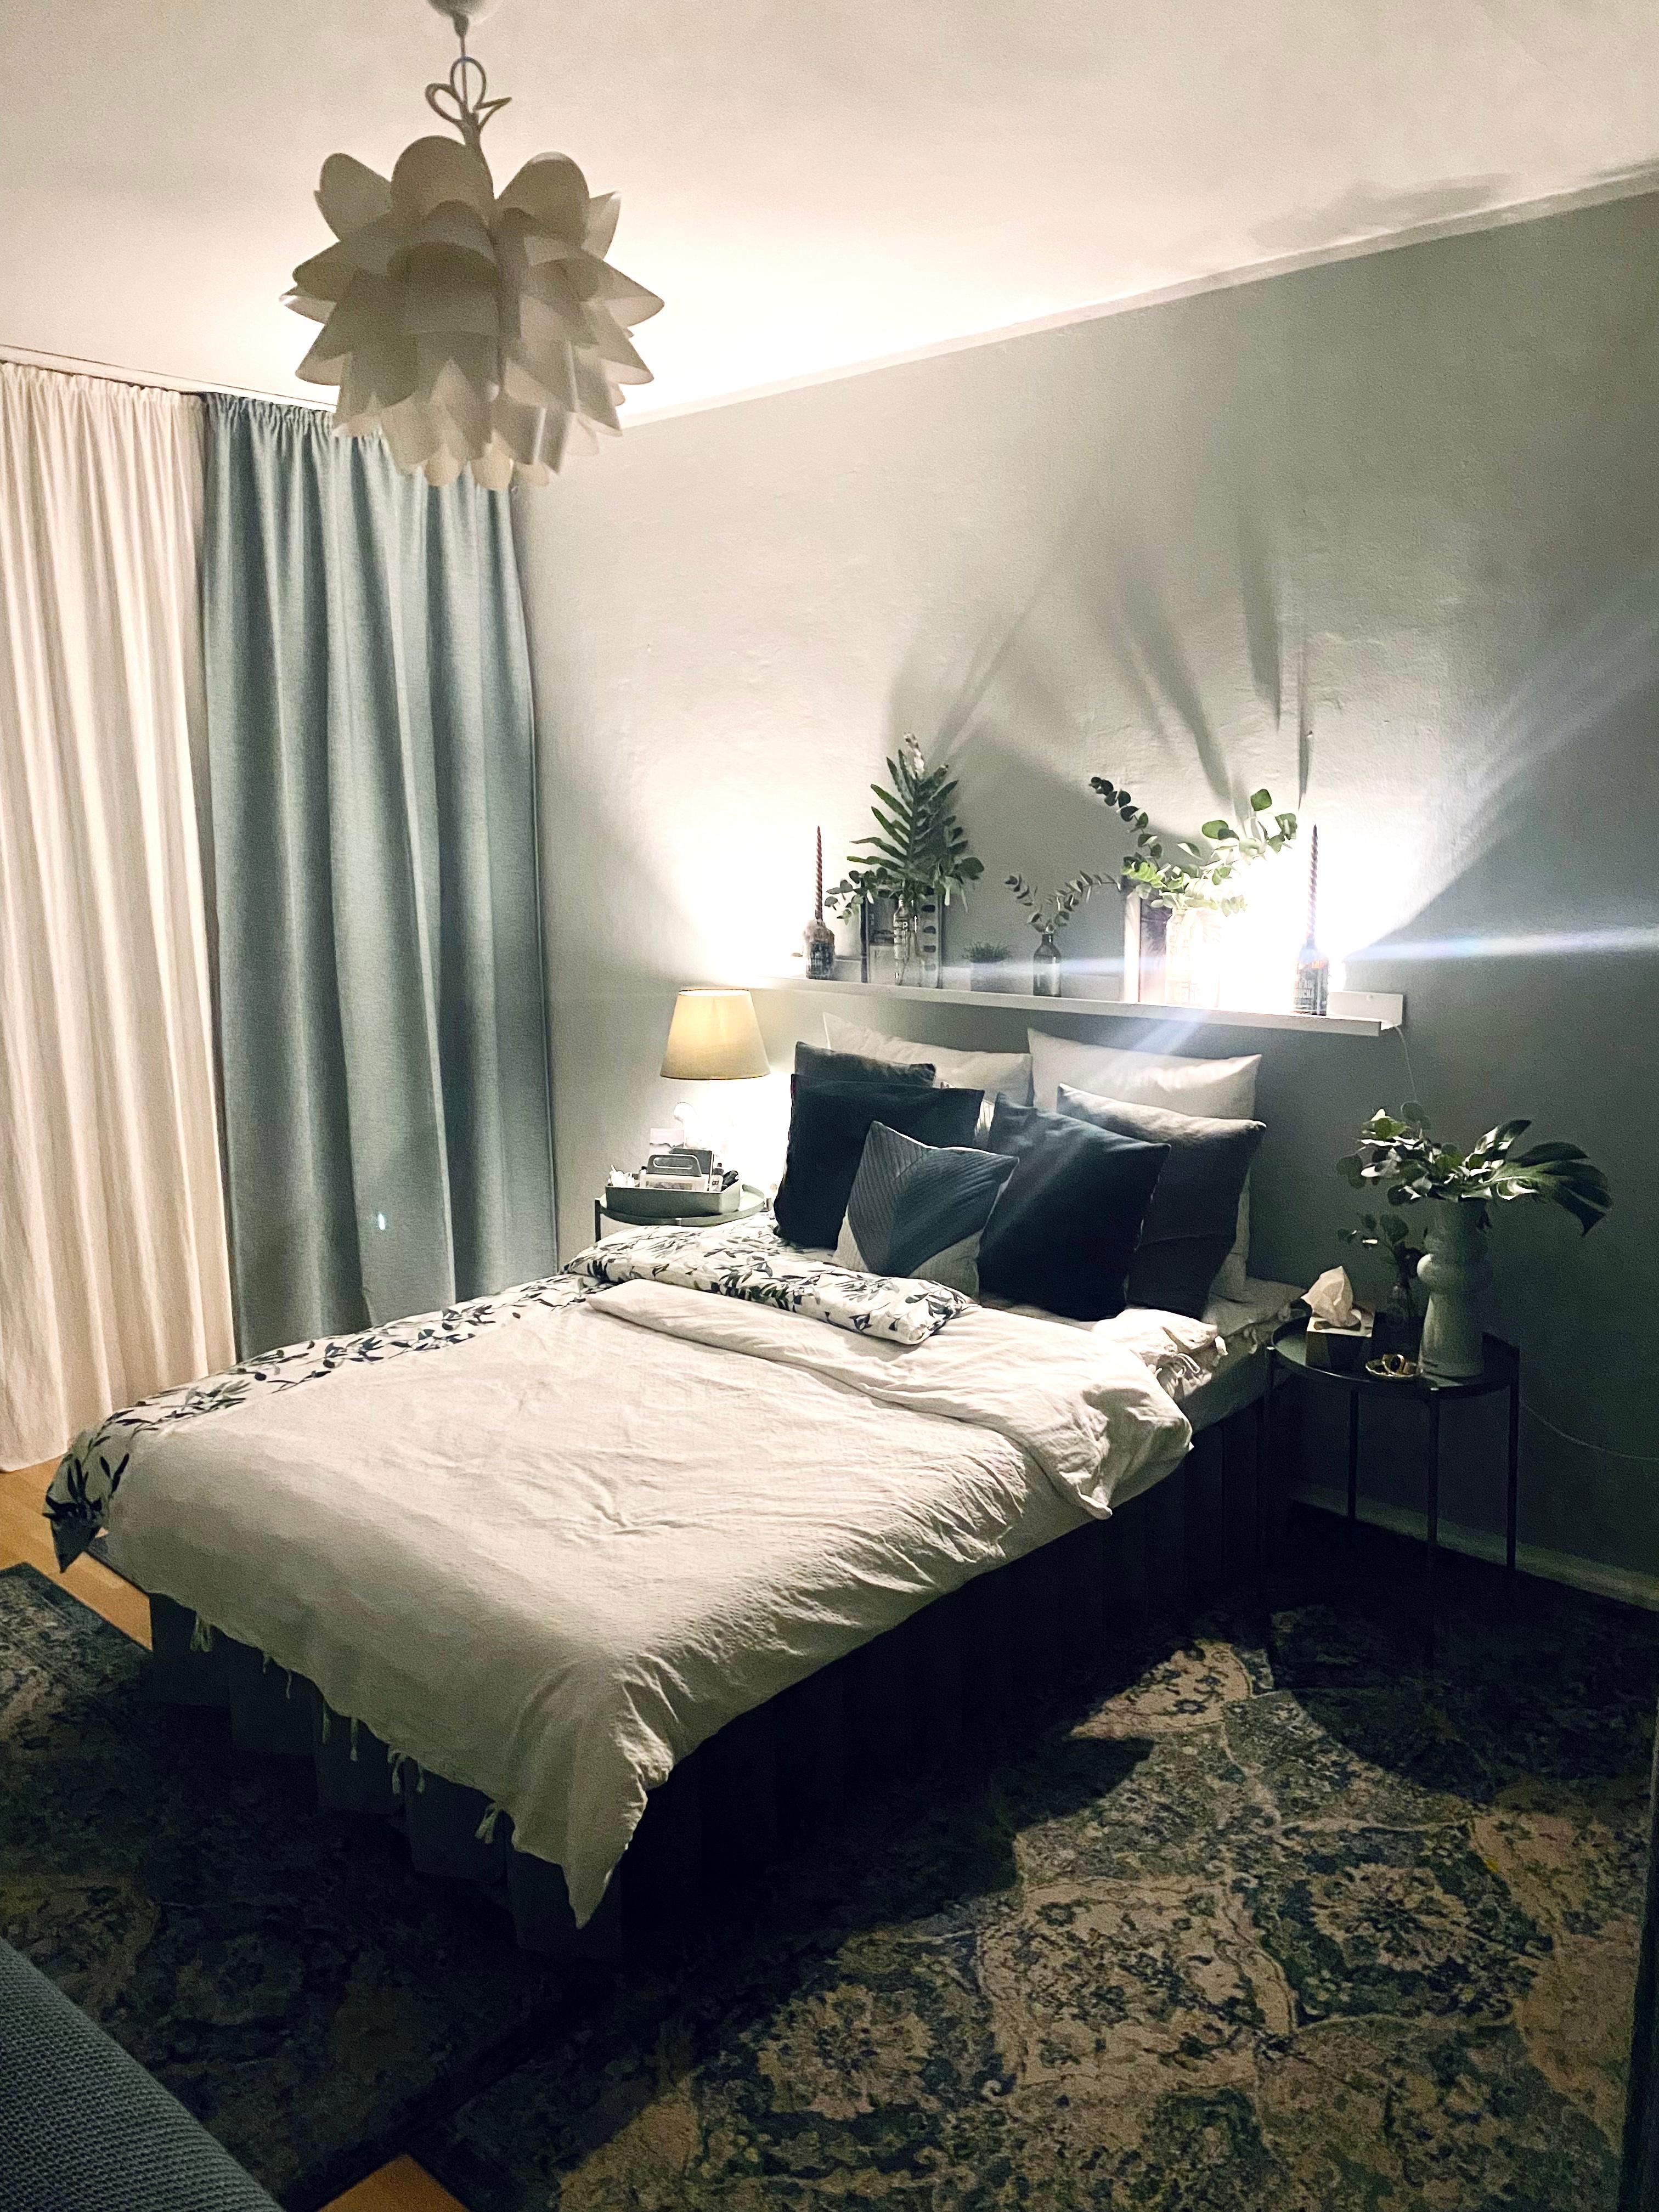 Cozy Saturday nights ✨ 
#bedroom #roomiabox #greengreengreen #sustainablesleeping #plantlover